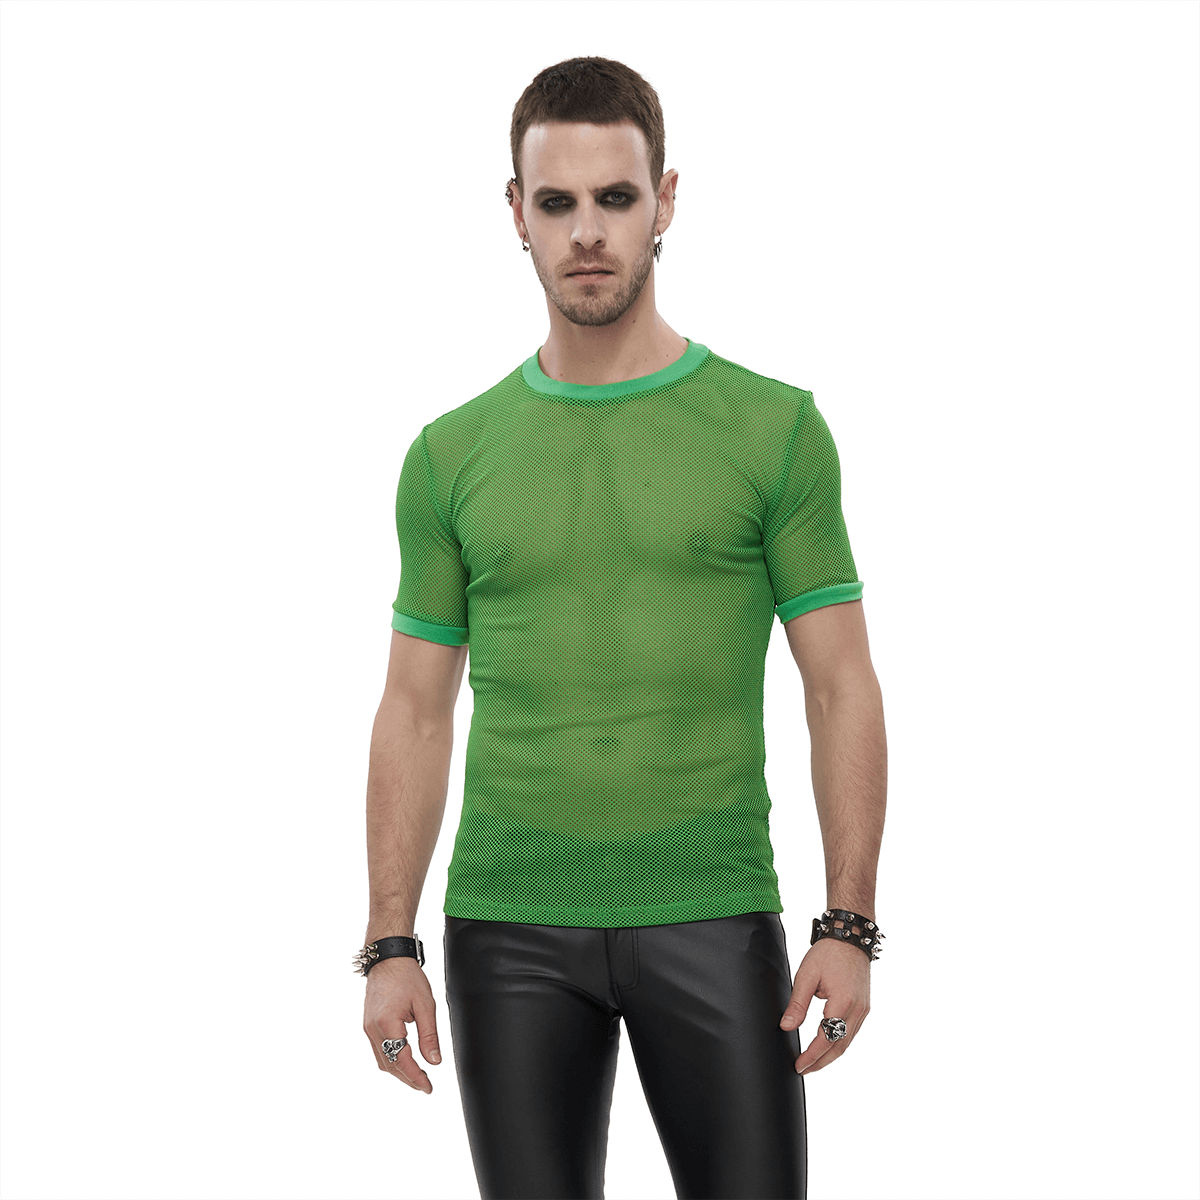 Punk Green O-Neck Mesh T-Shirt / Male Short-Sleeved Transparent T-Shirt / Alternative Clothing - HARD'N'HEAVY